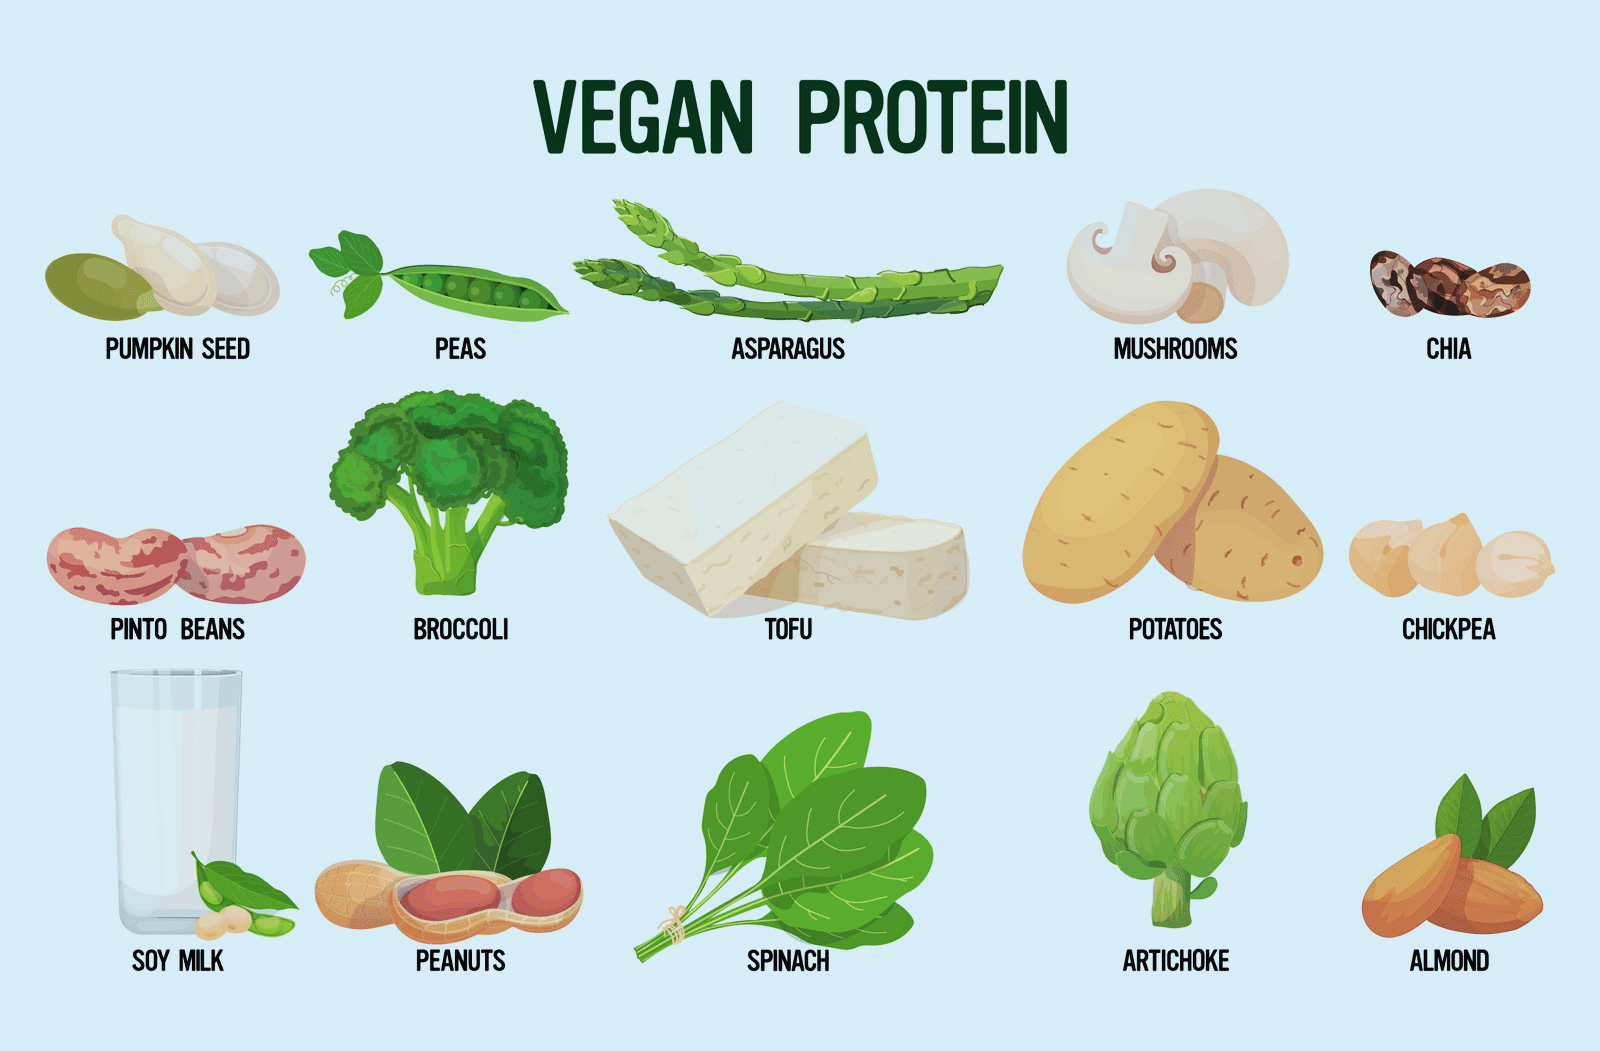 Sources of Vegan Protein